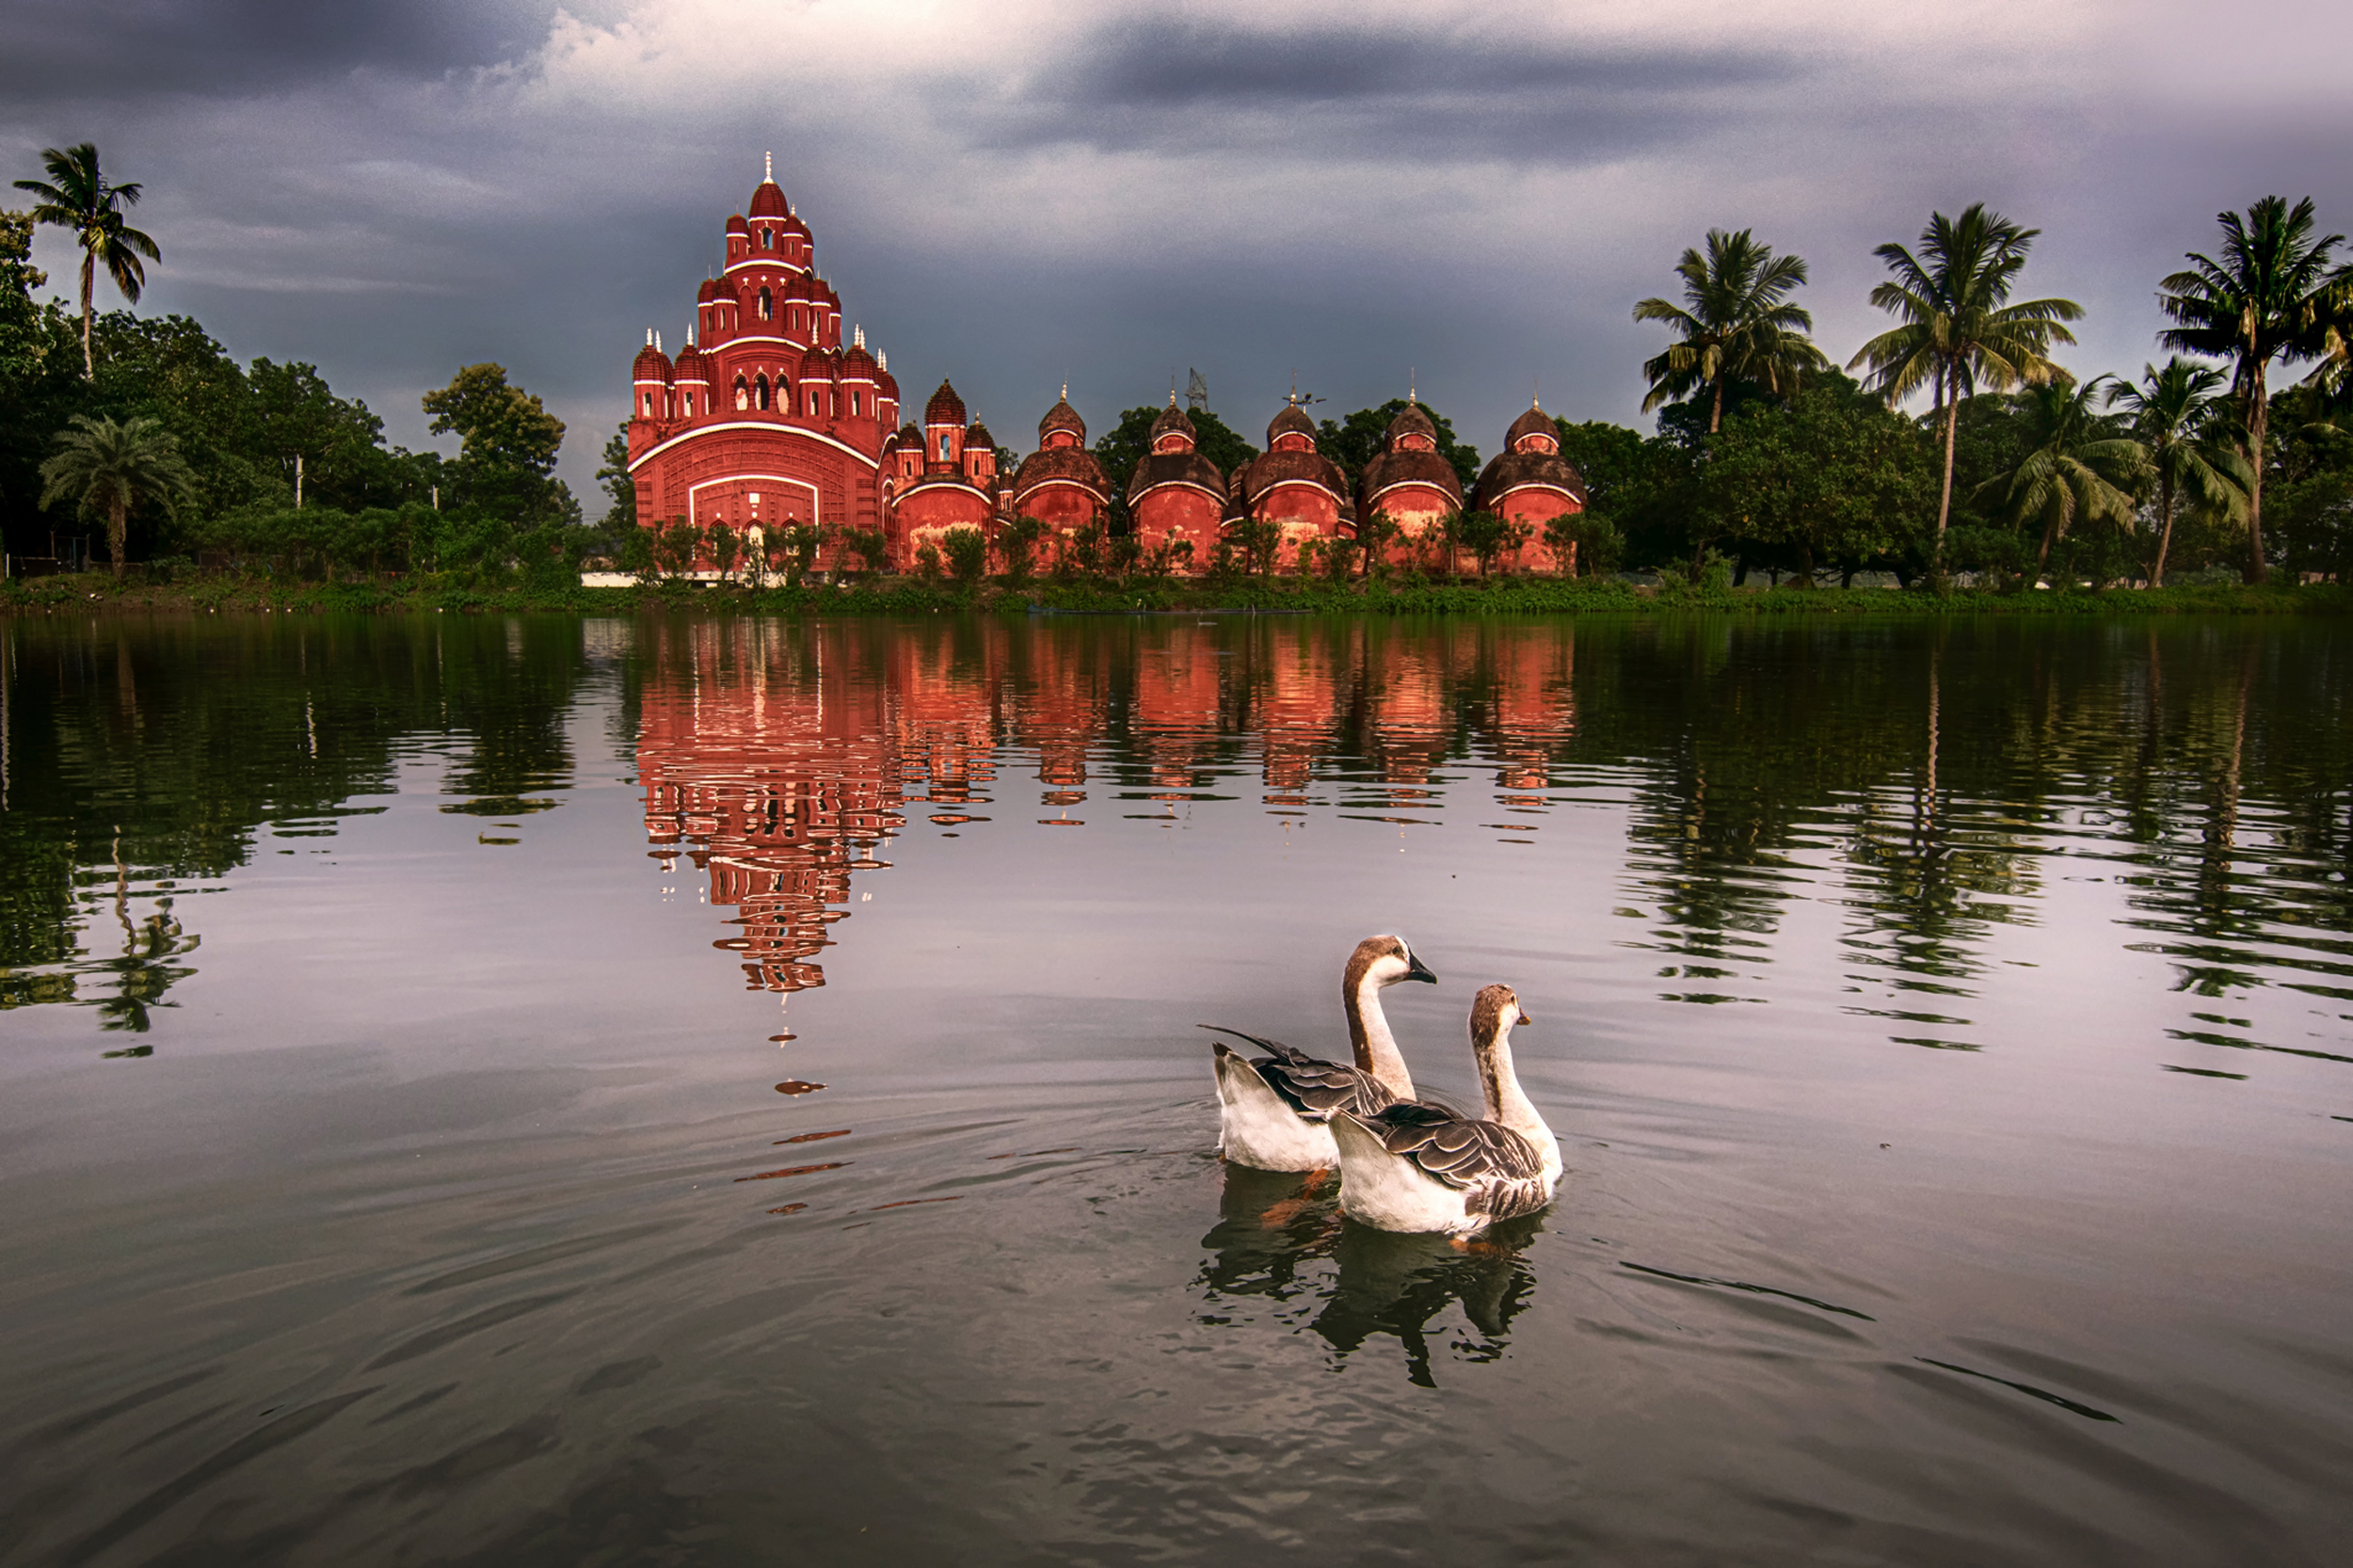 Anondomoyee Kali Temple across the lake.